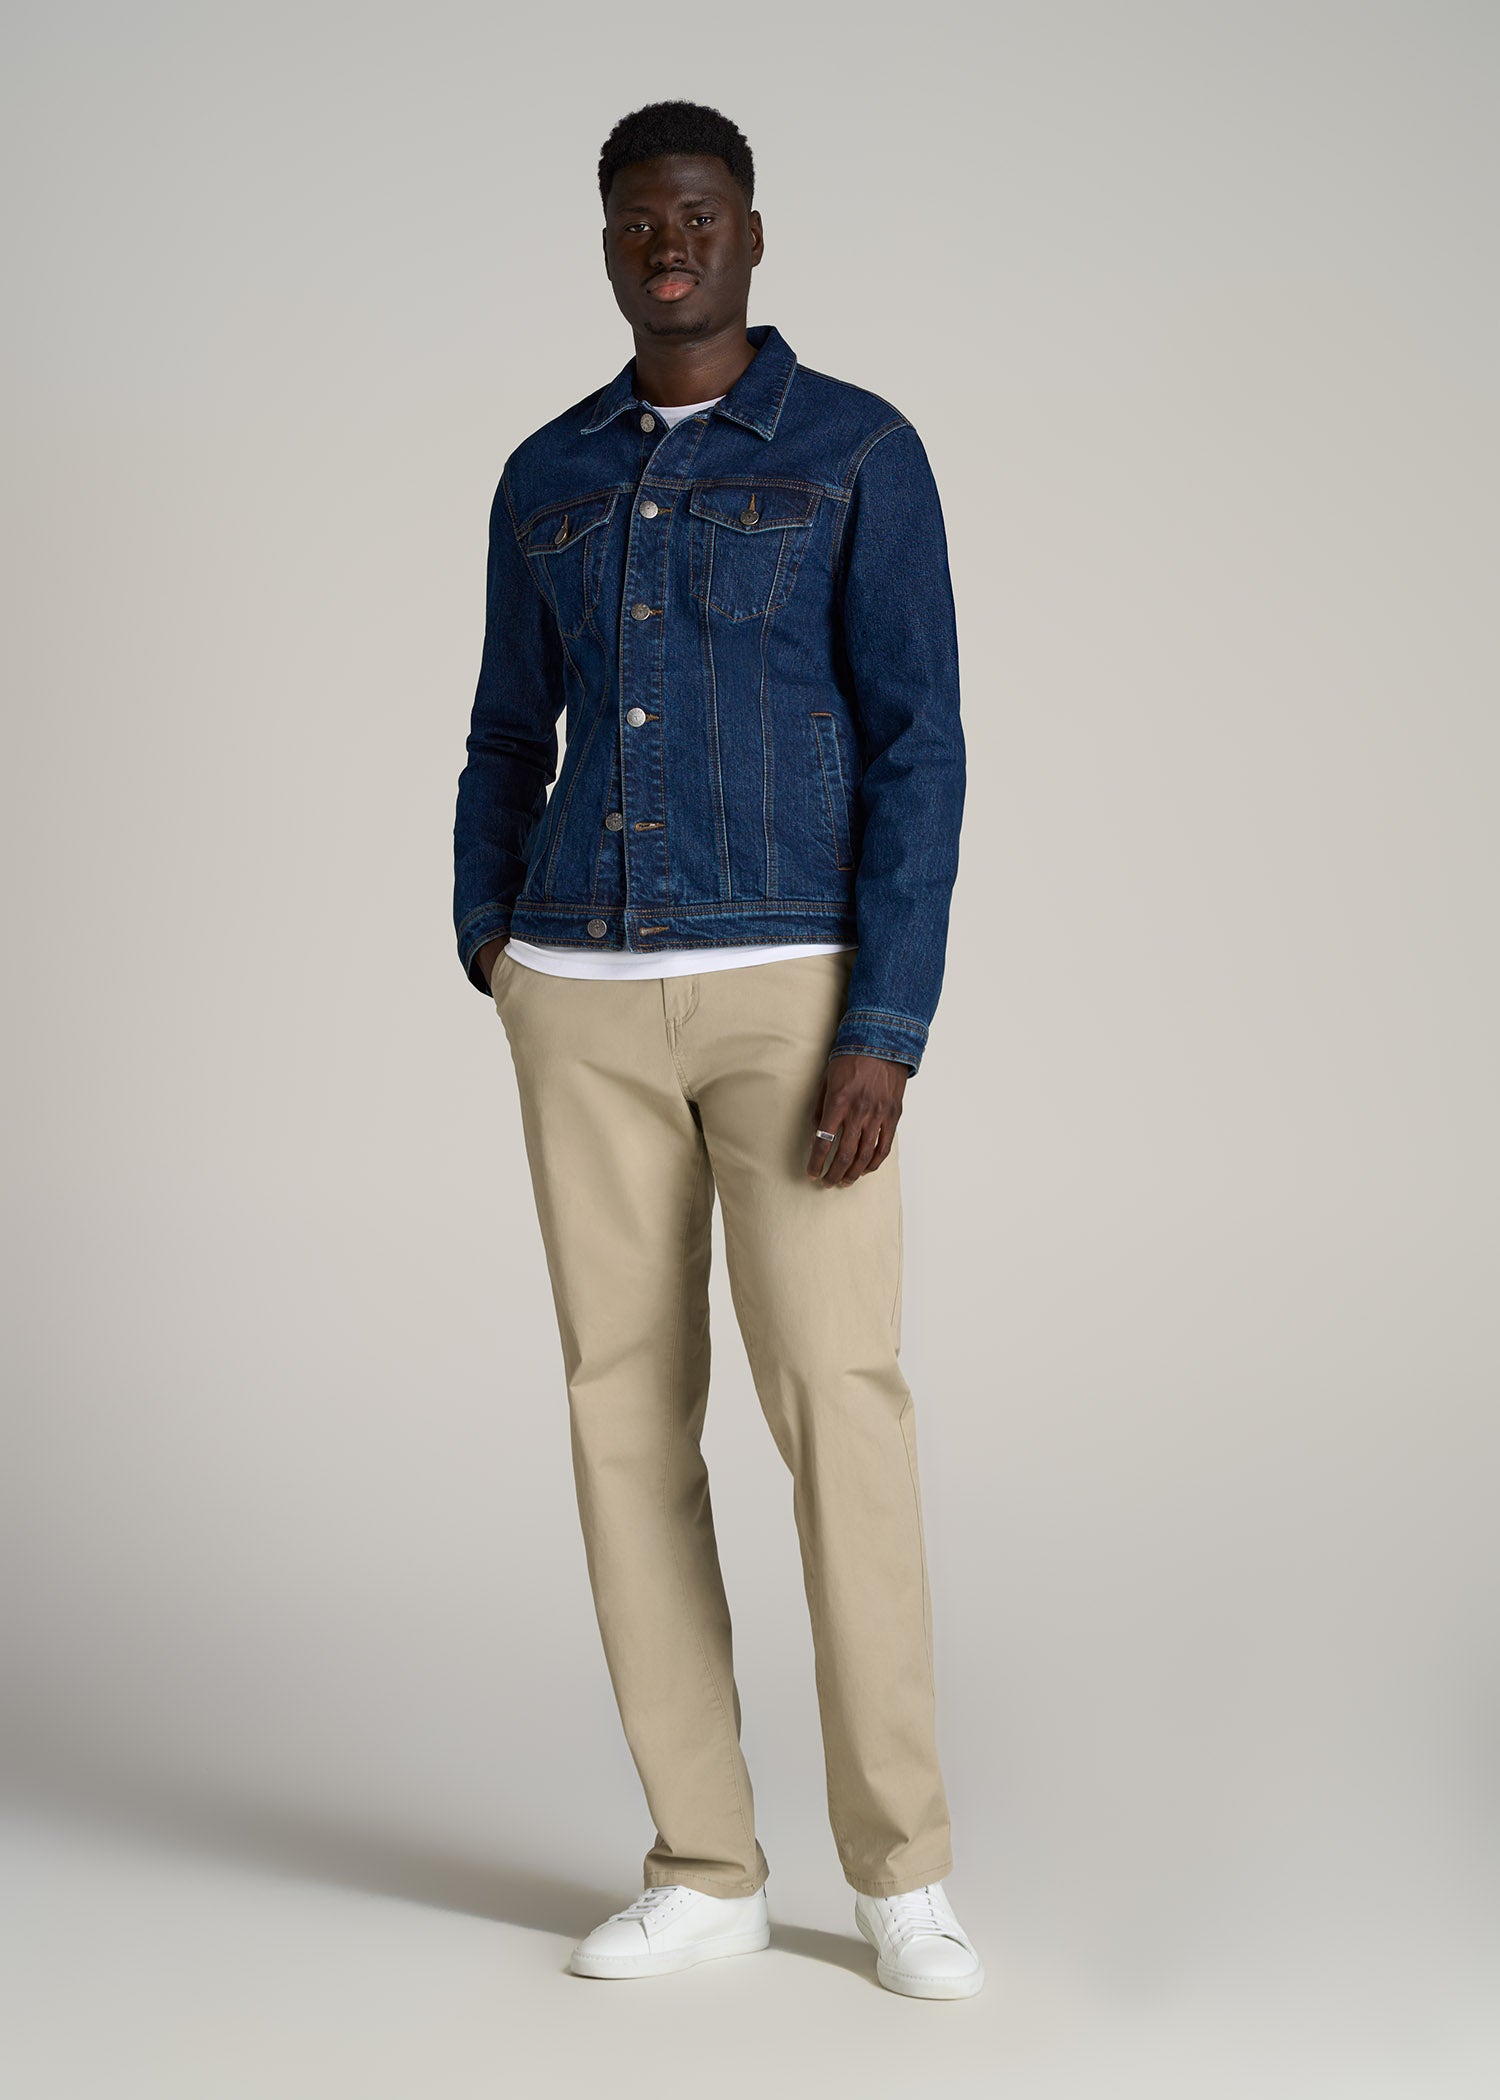 LJ&S Men's Tall Denim Jacket in Medium Blue – American Tall